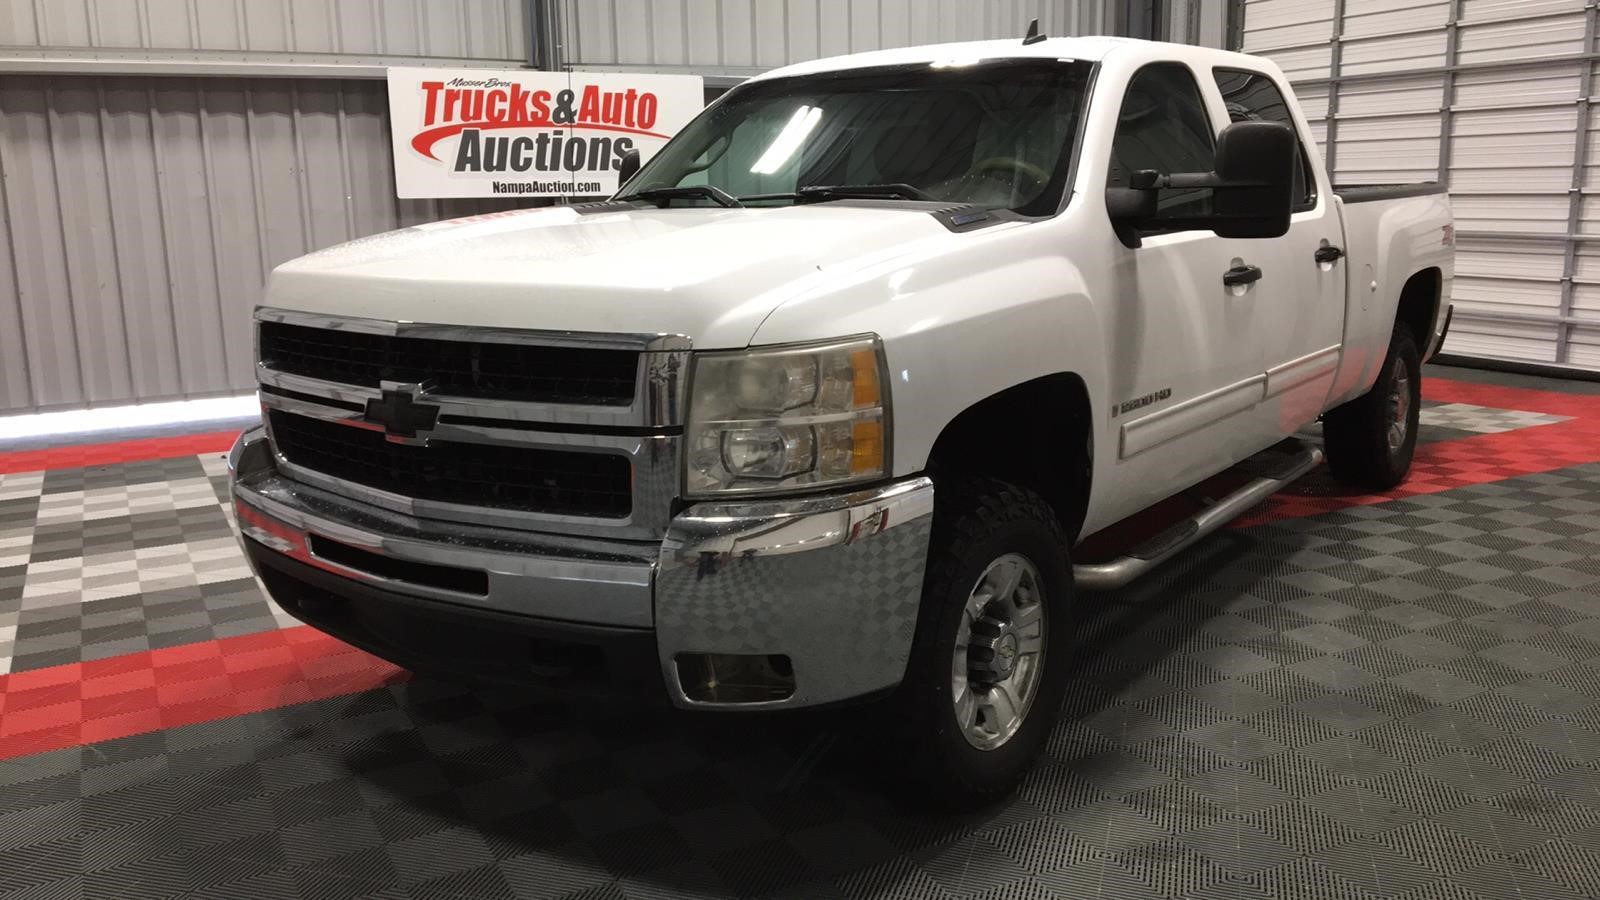 101917 Trucks & Auto Auctions